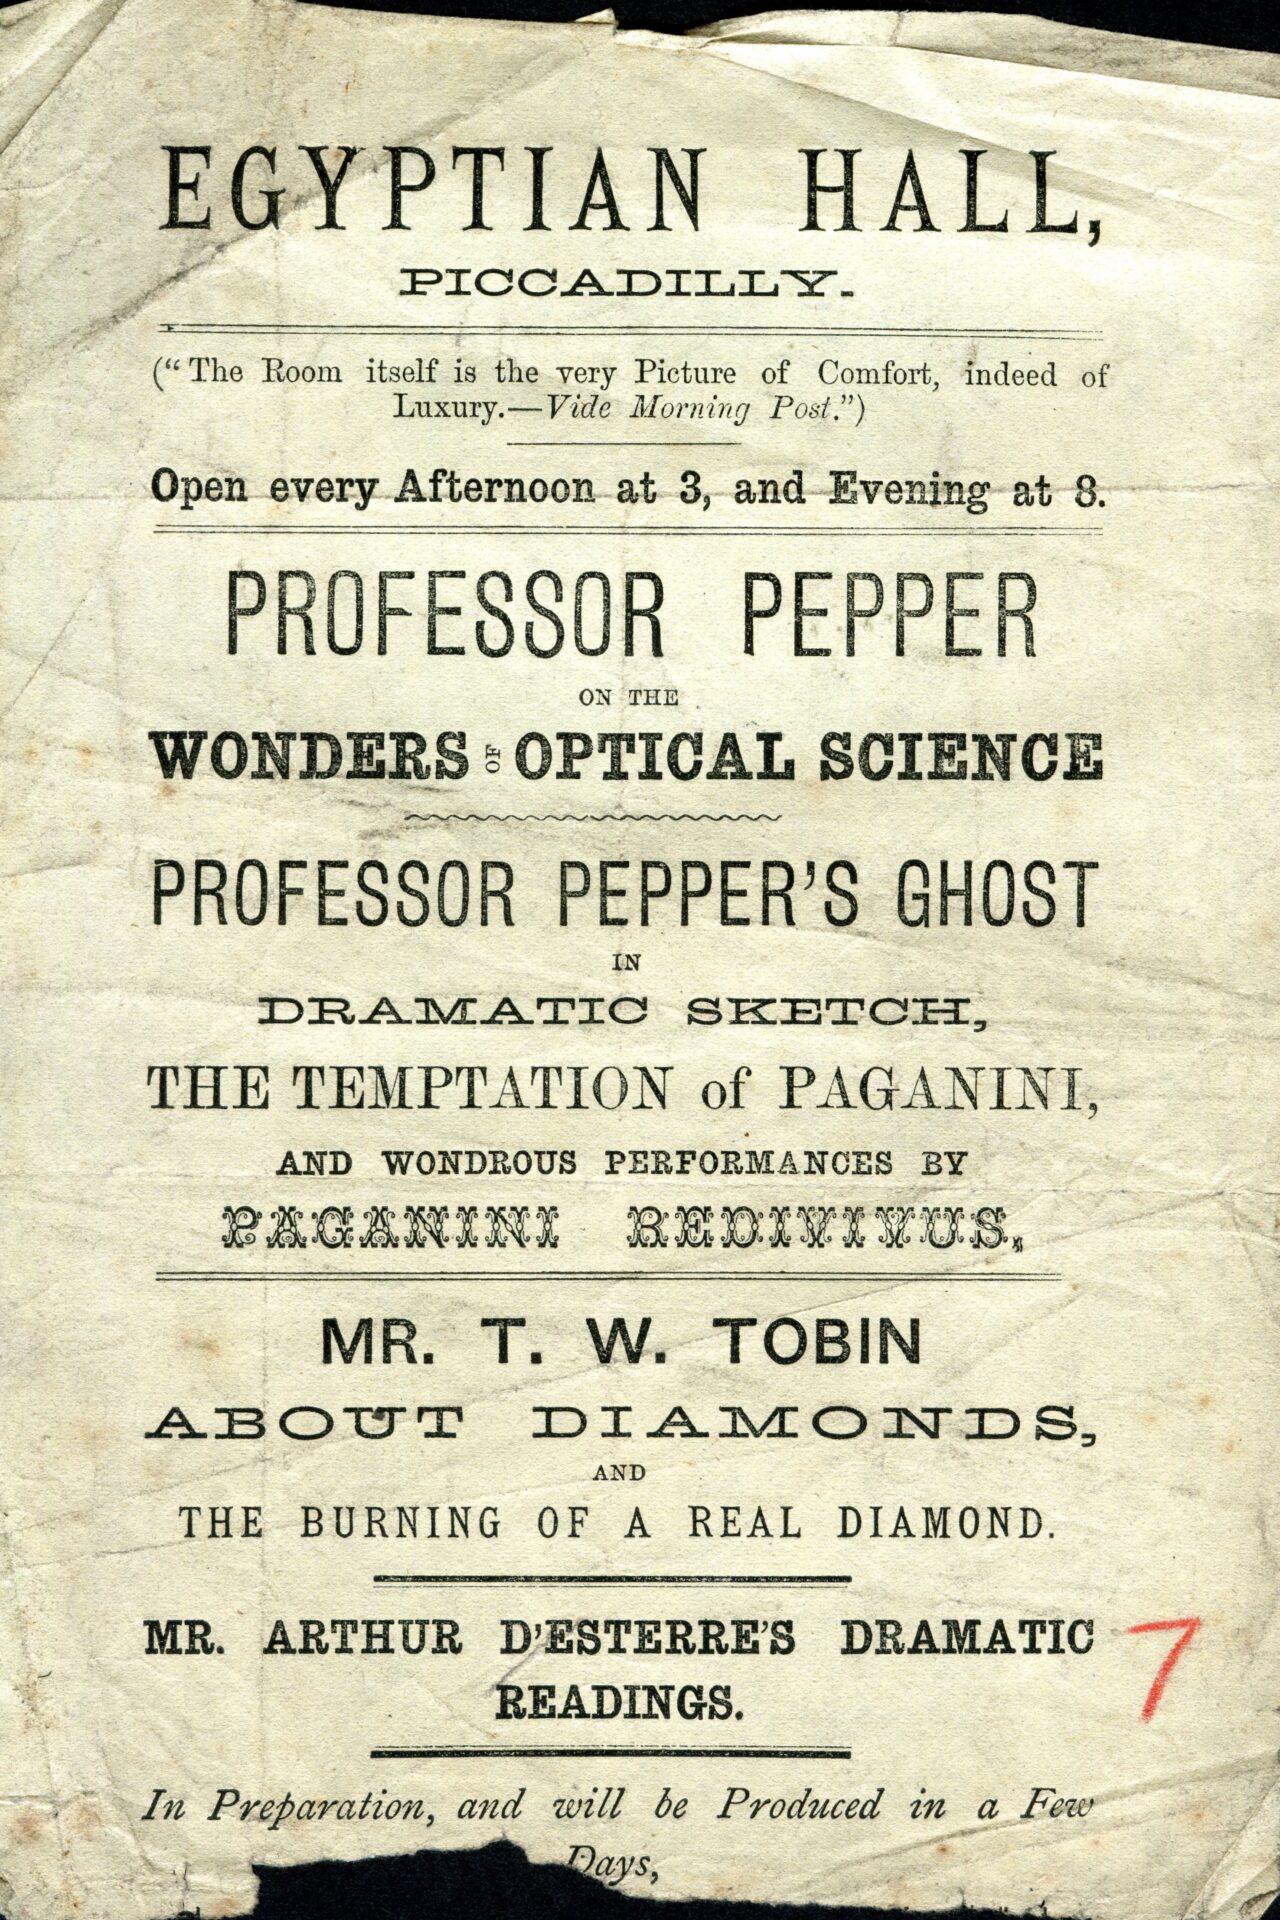 Flier for Professor Pepper at the Egyptian Hall